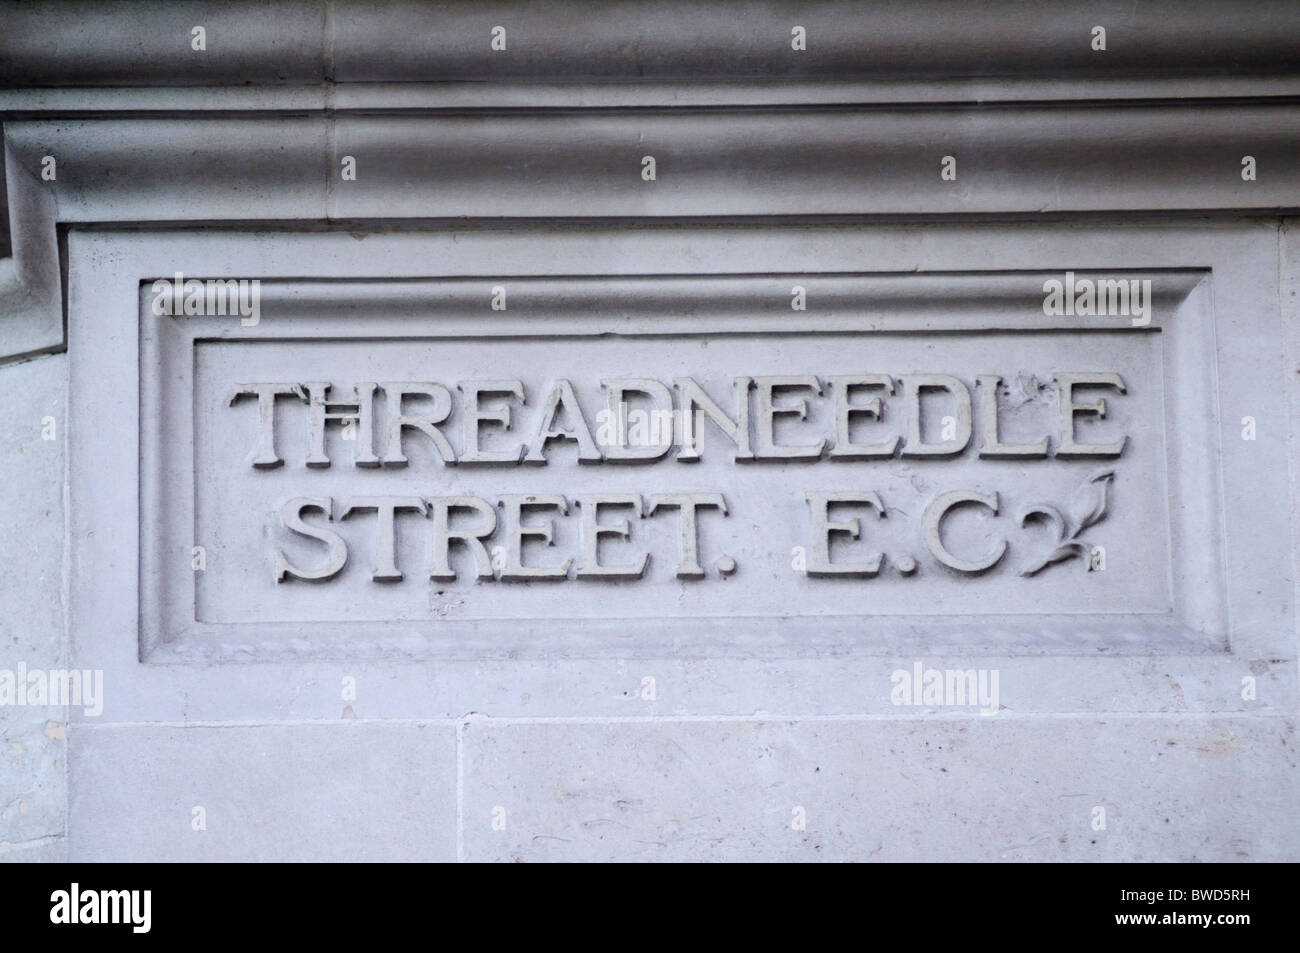 Threadneedle Street EC2 street sign, London, England, UK Banque D'Images